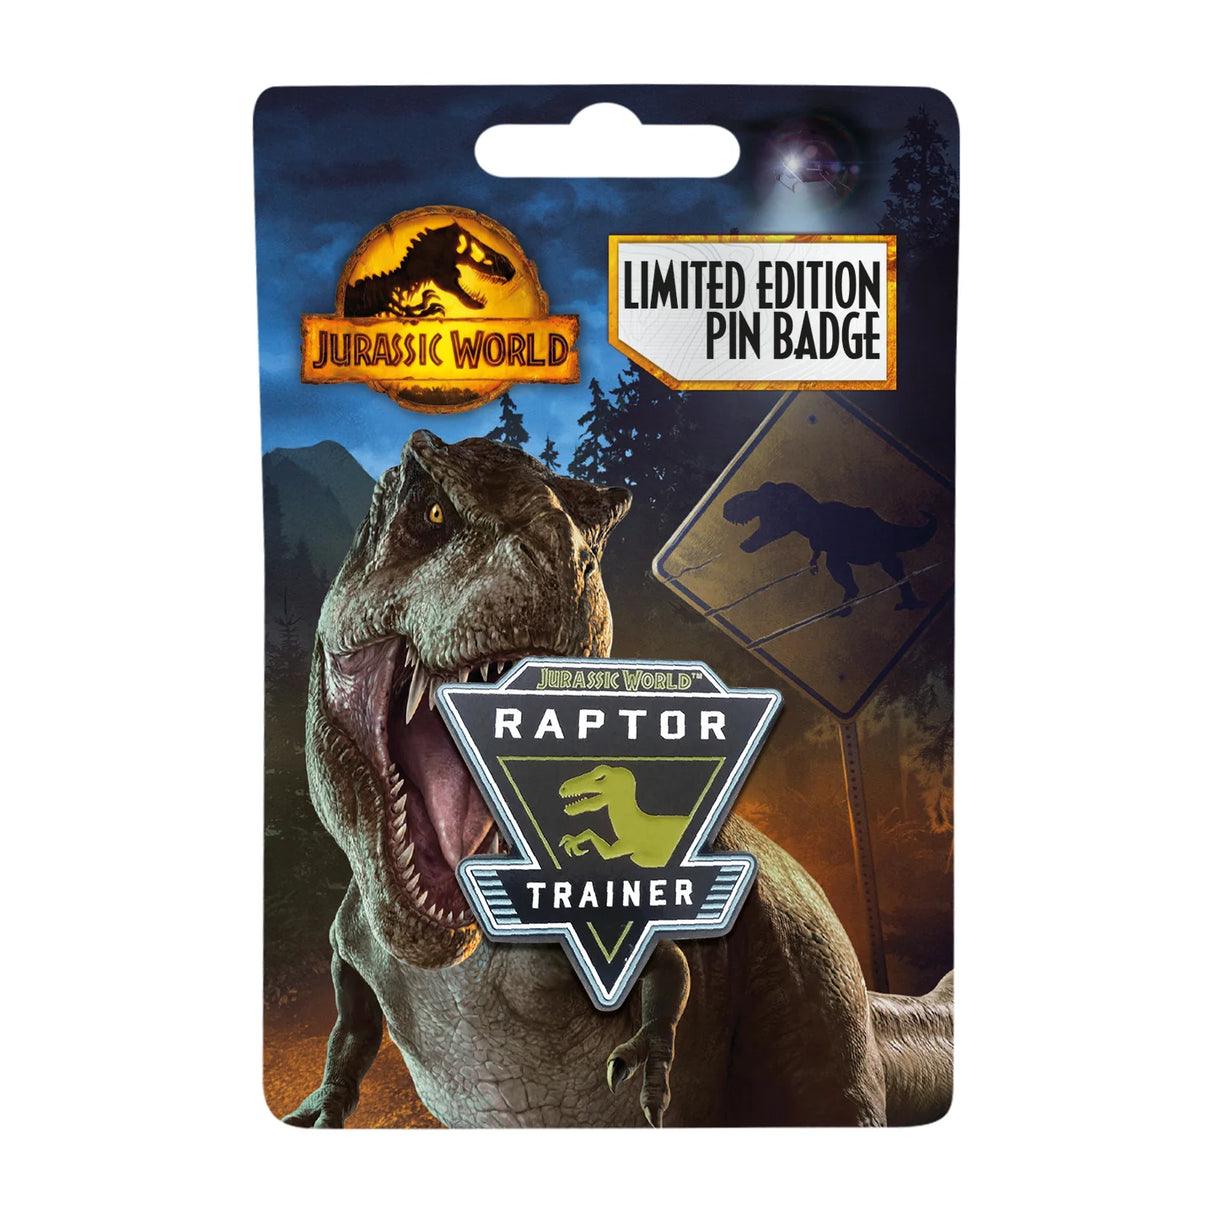 Jurassic World Limited Edition Pin Badge